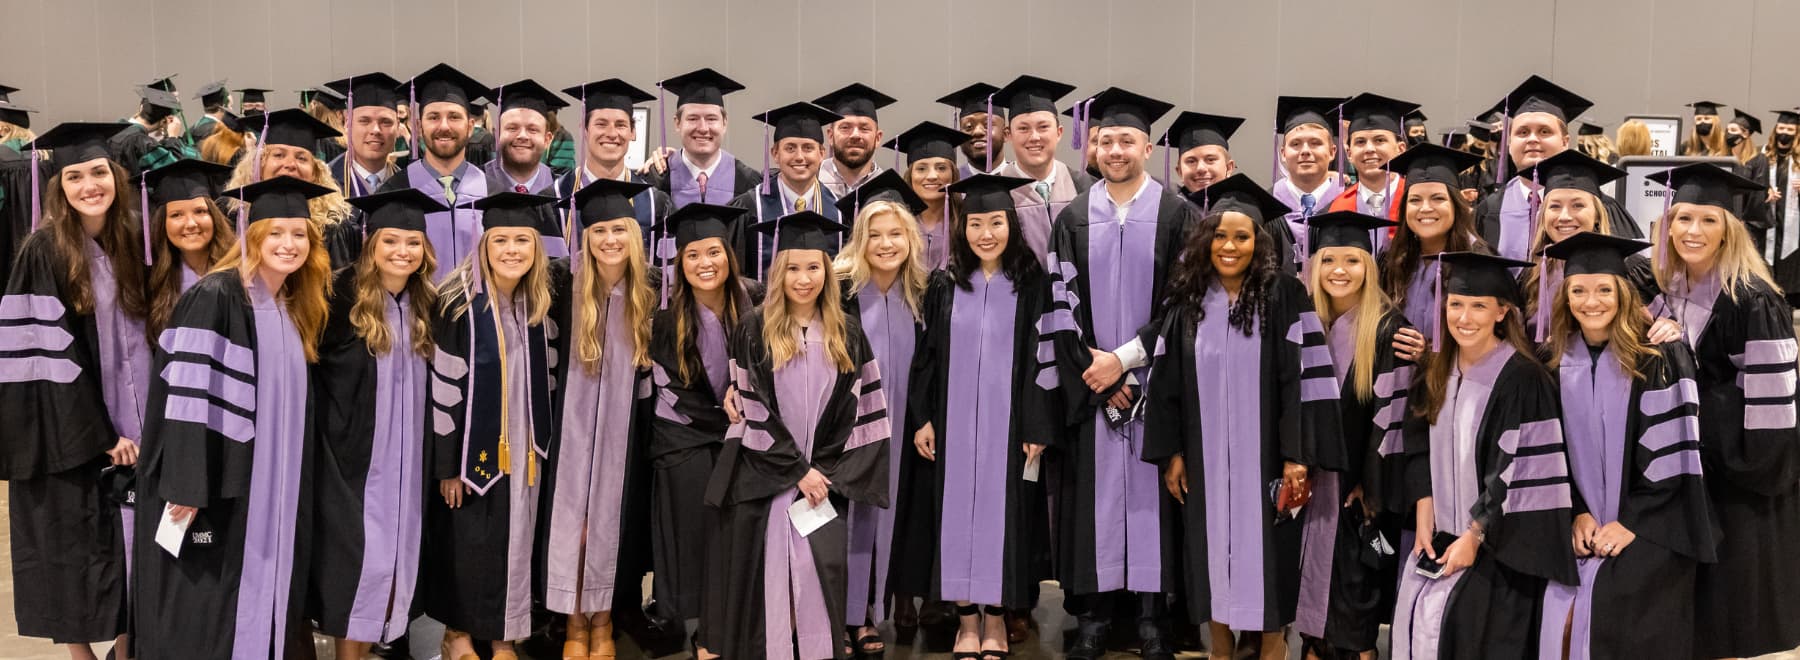 2021 dental students at graduation